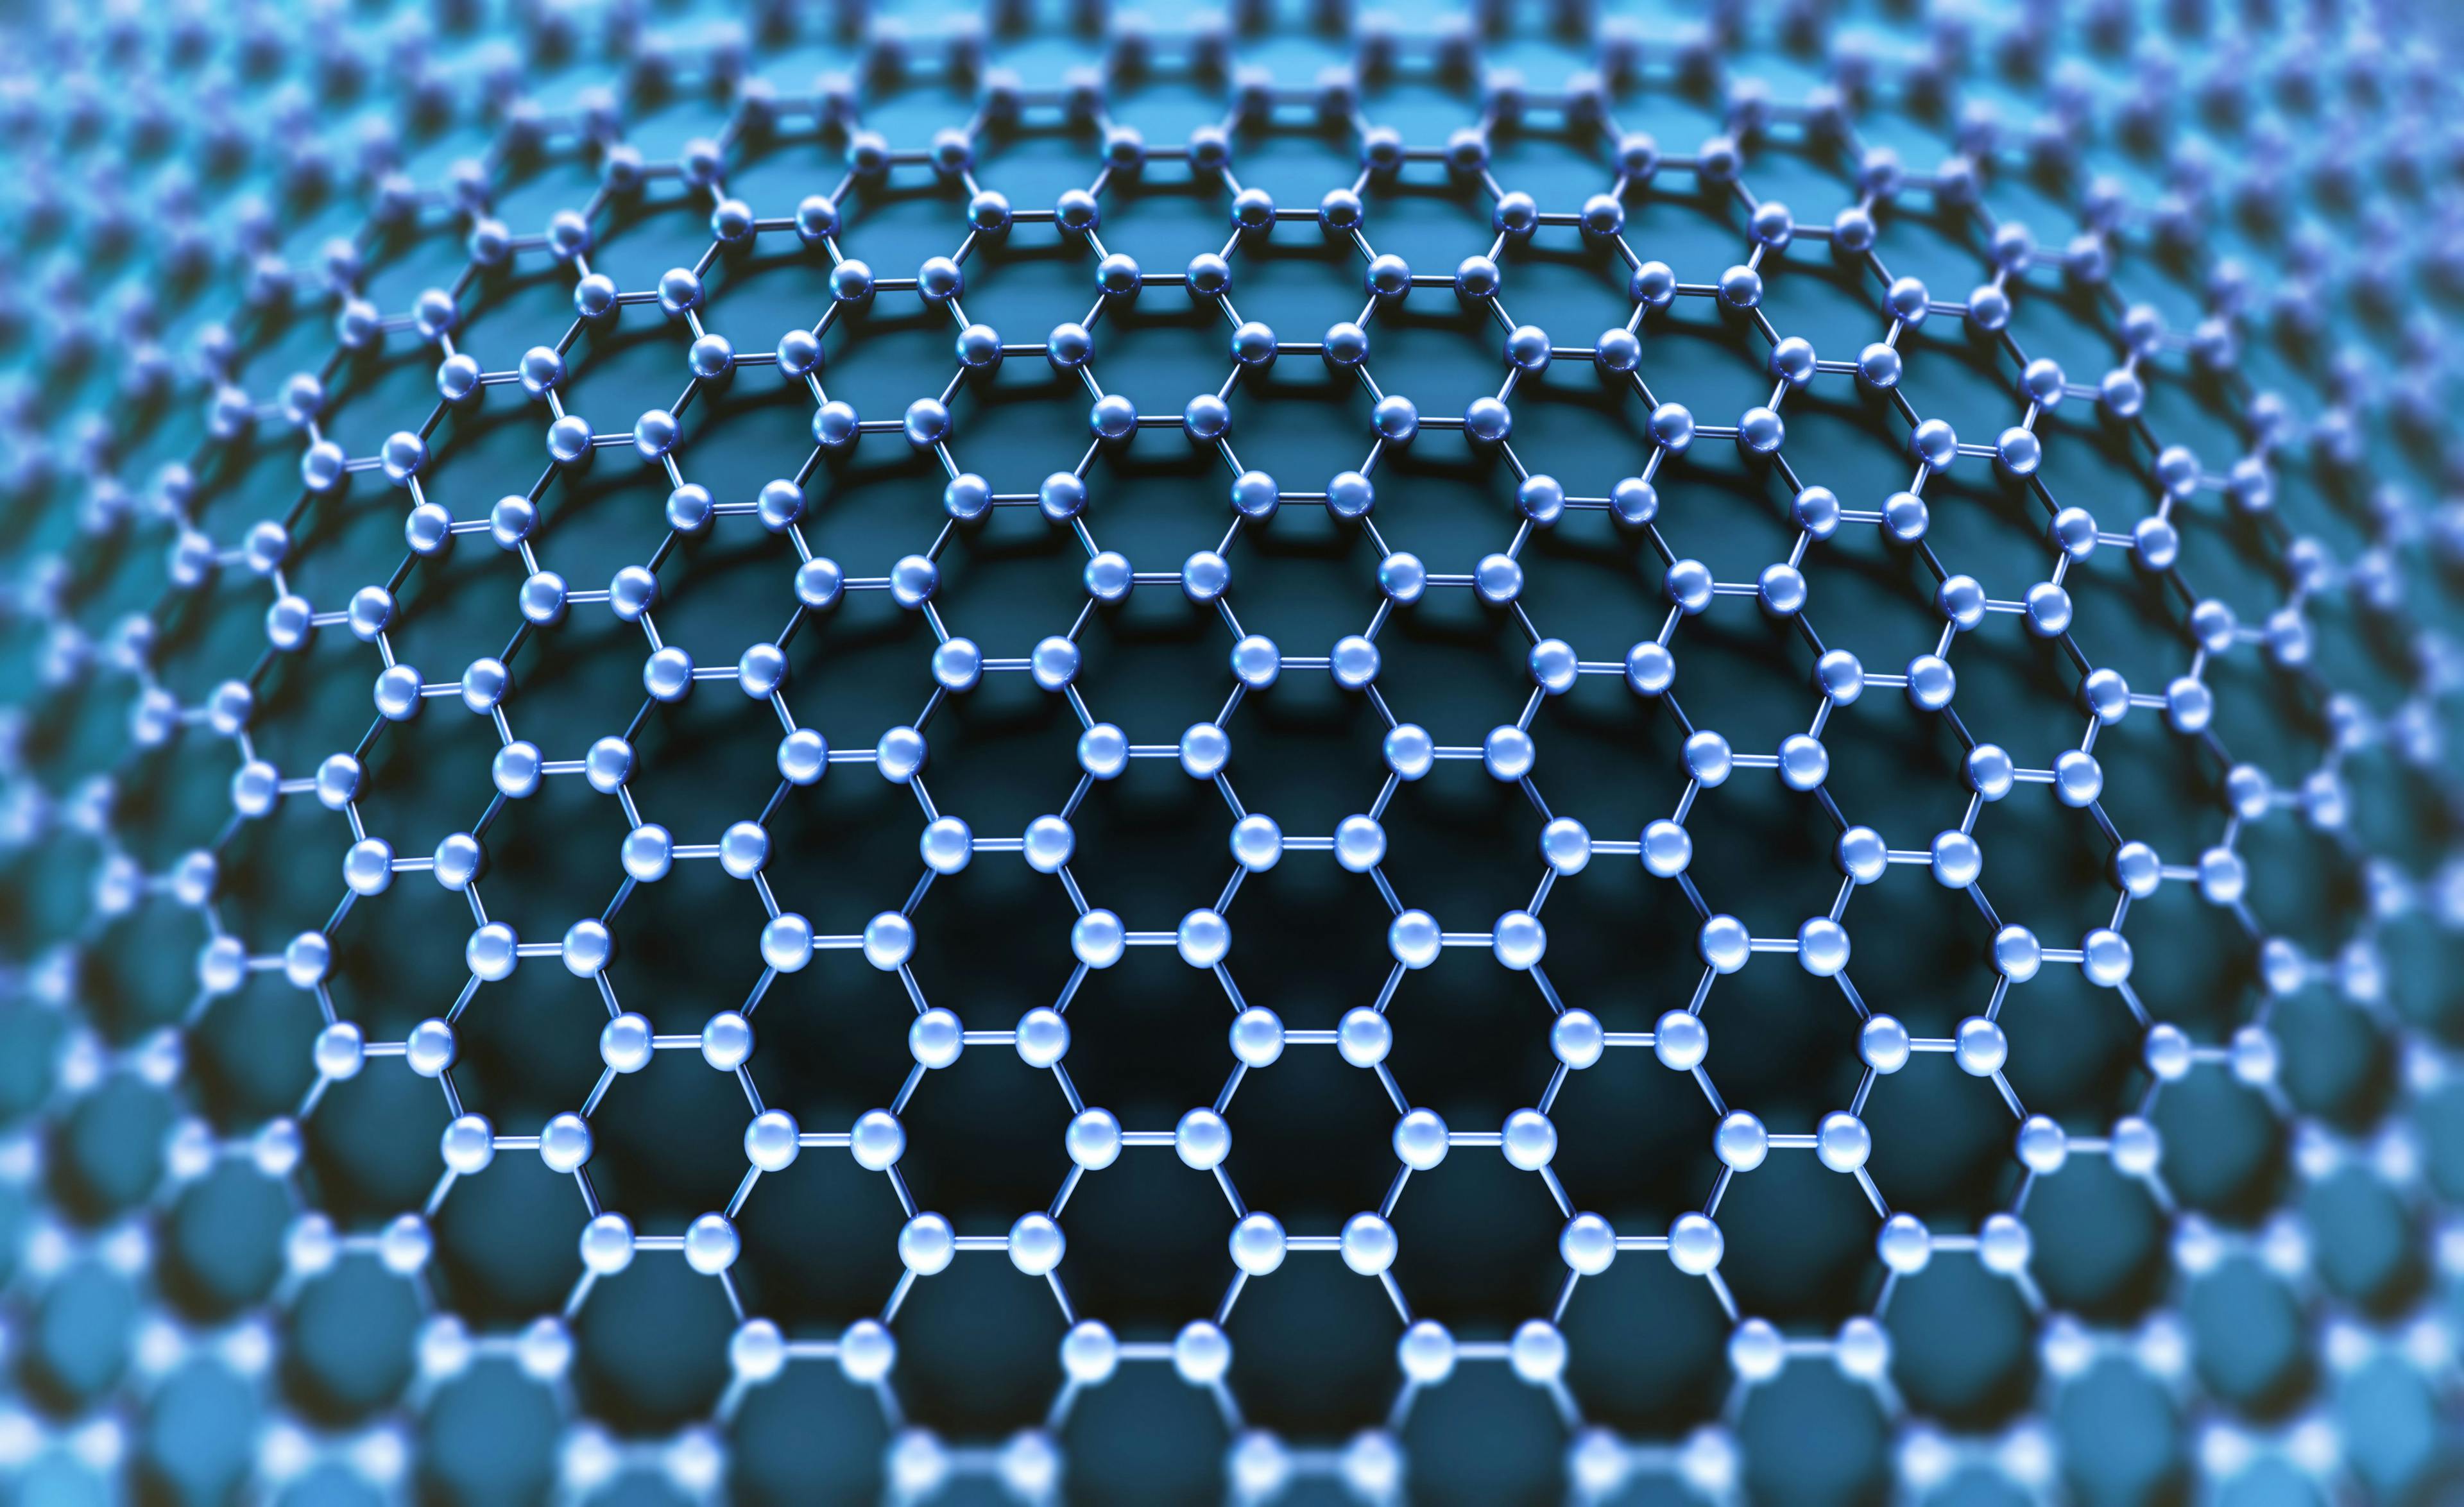 Crystallized Carbon Hexagonal System | Image Credit: © ktsdesign - stock.adobe.com